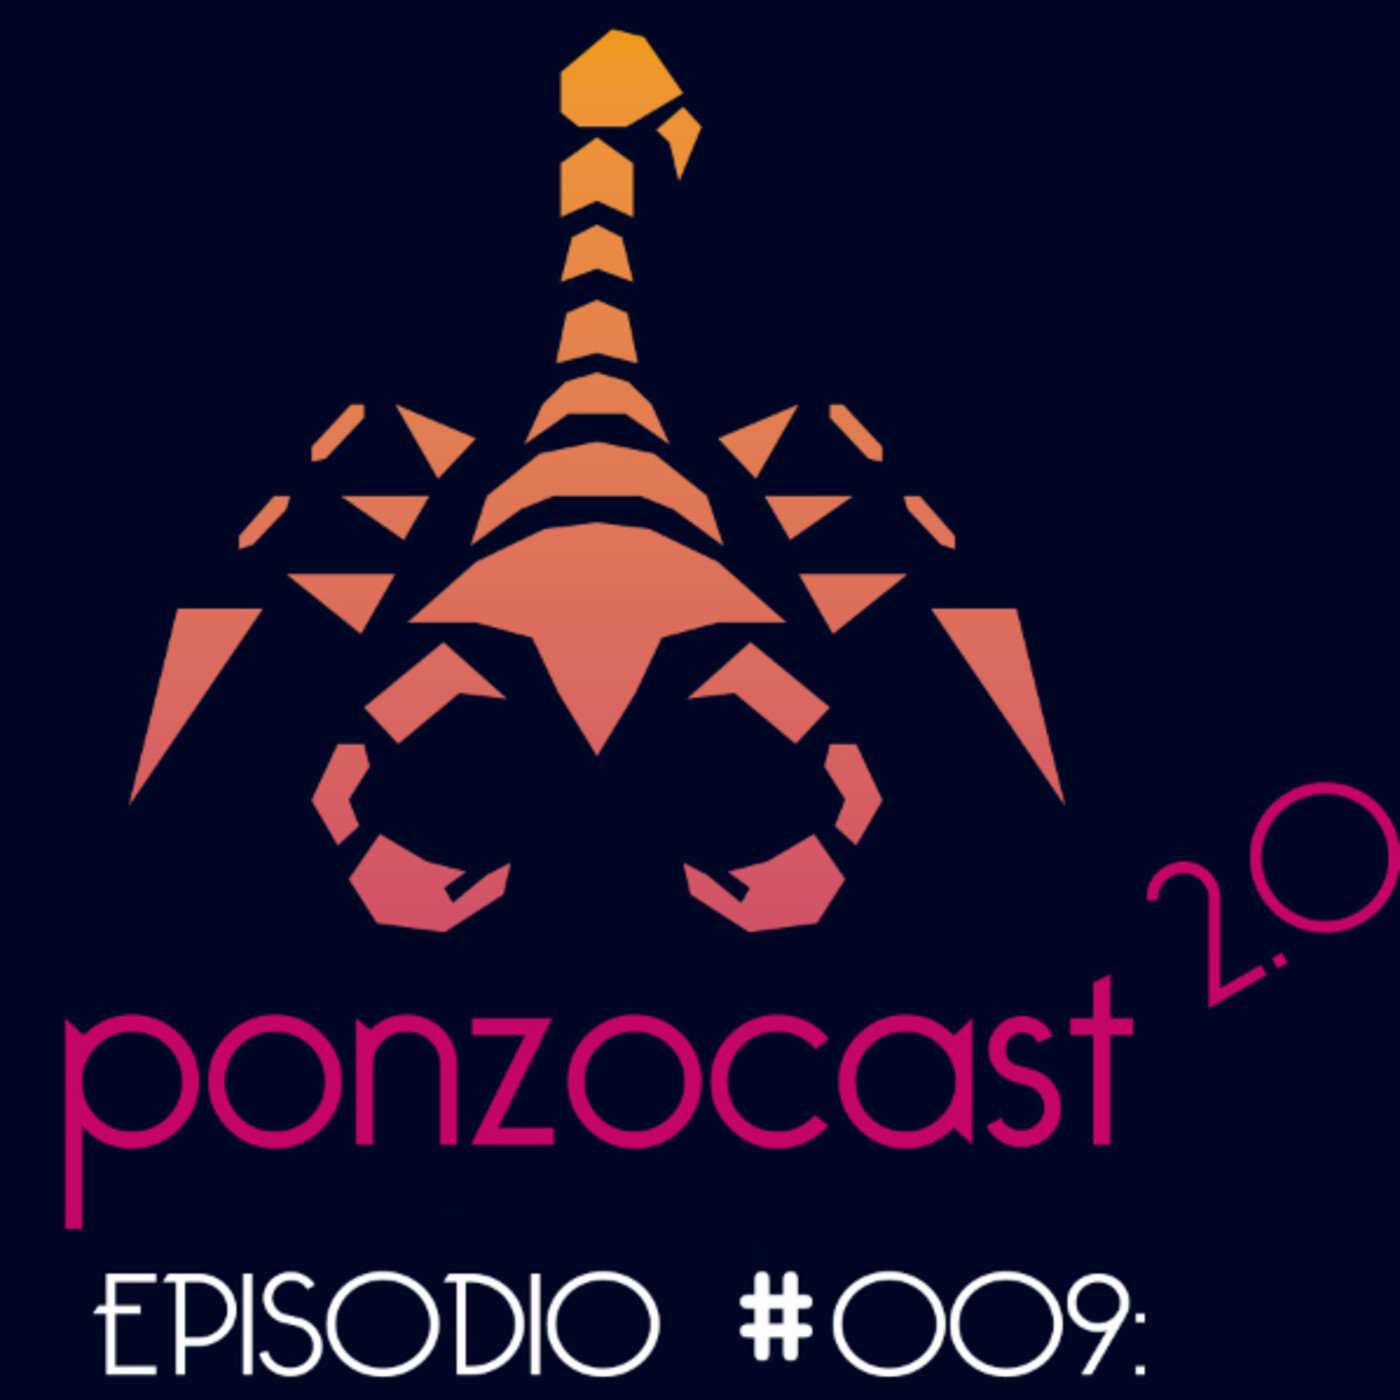 Ponzocast 2.0: Episodio 009 - Te agrando el paquete